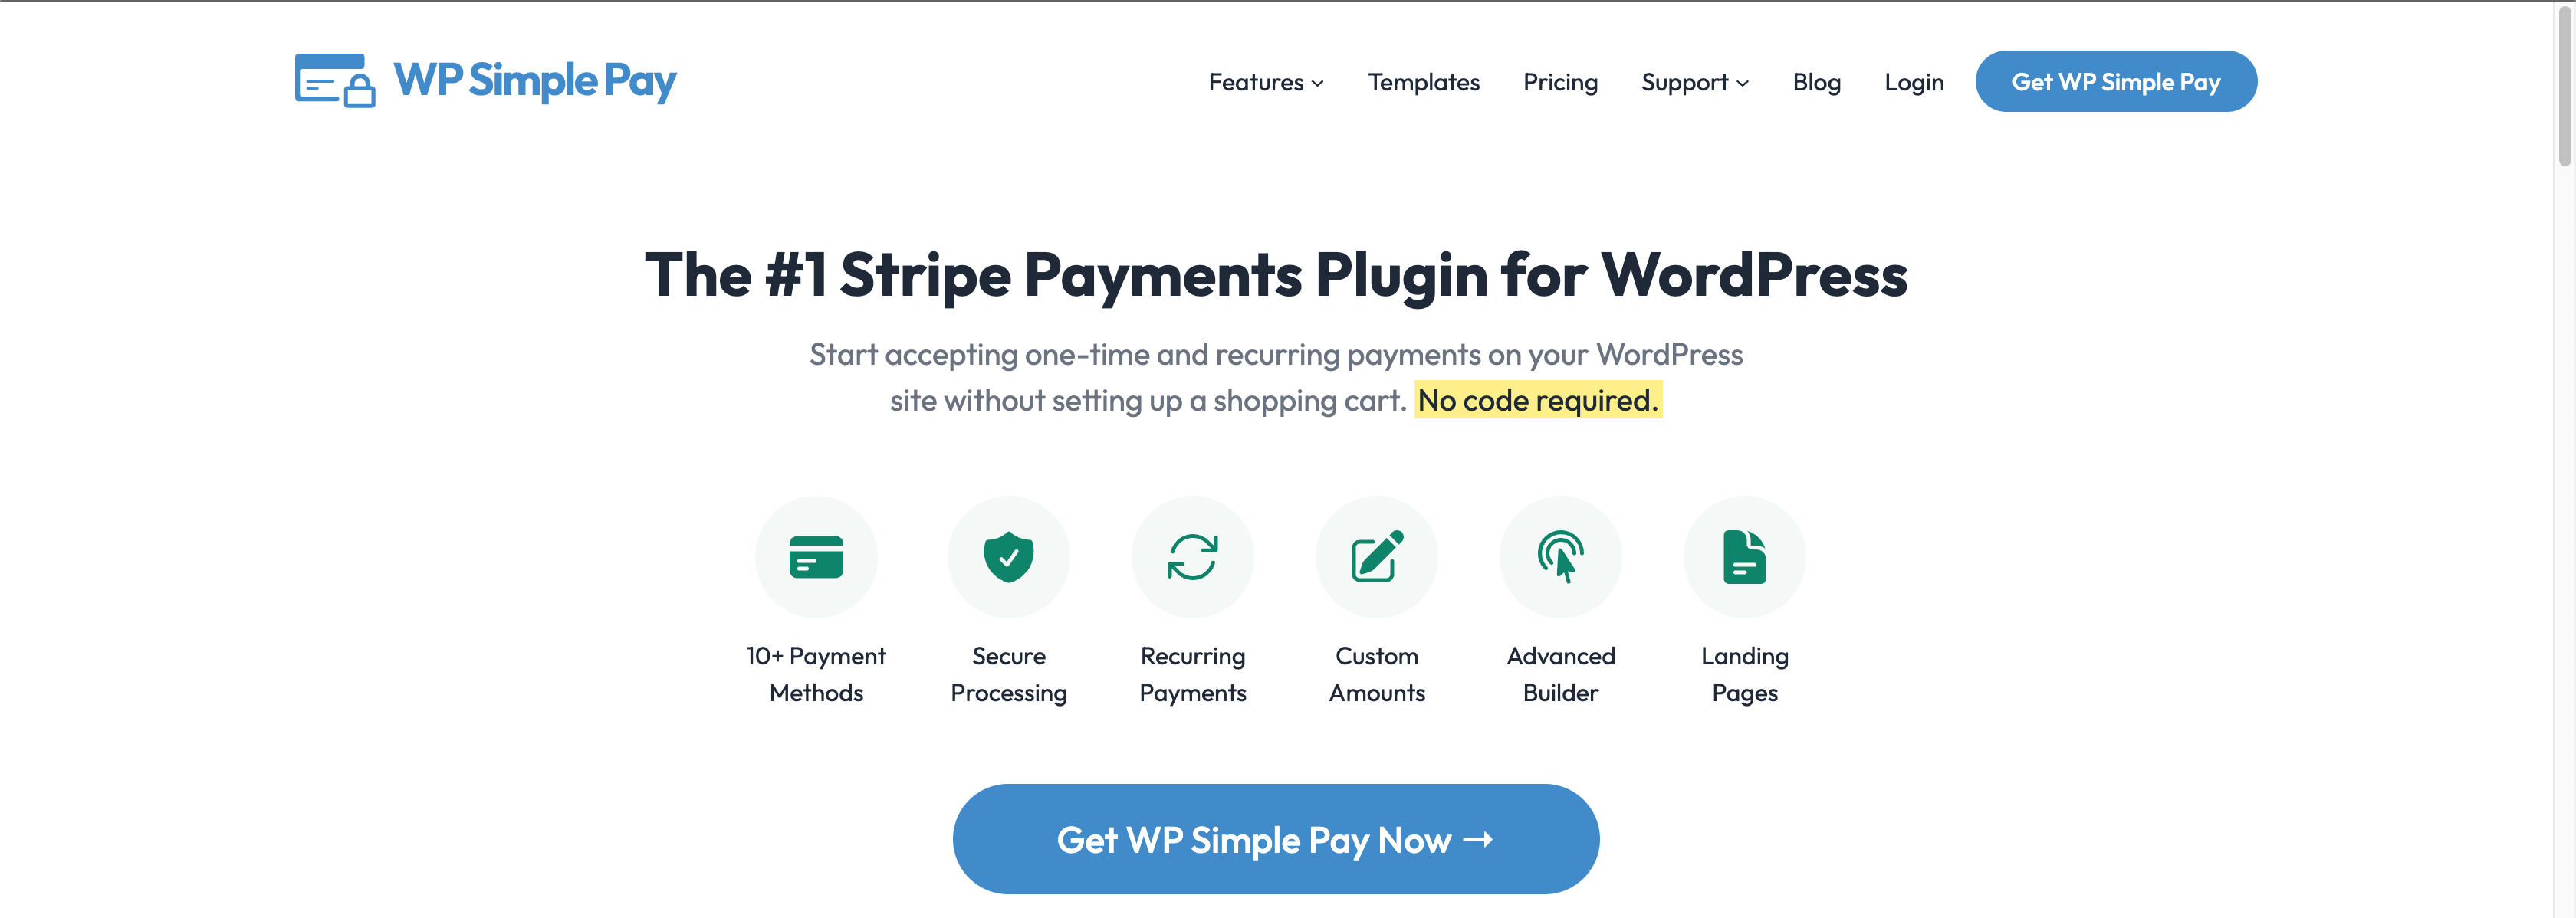 WP Simple Pay - WordPress eCommerce Plugin